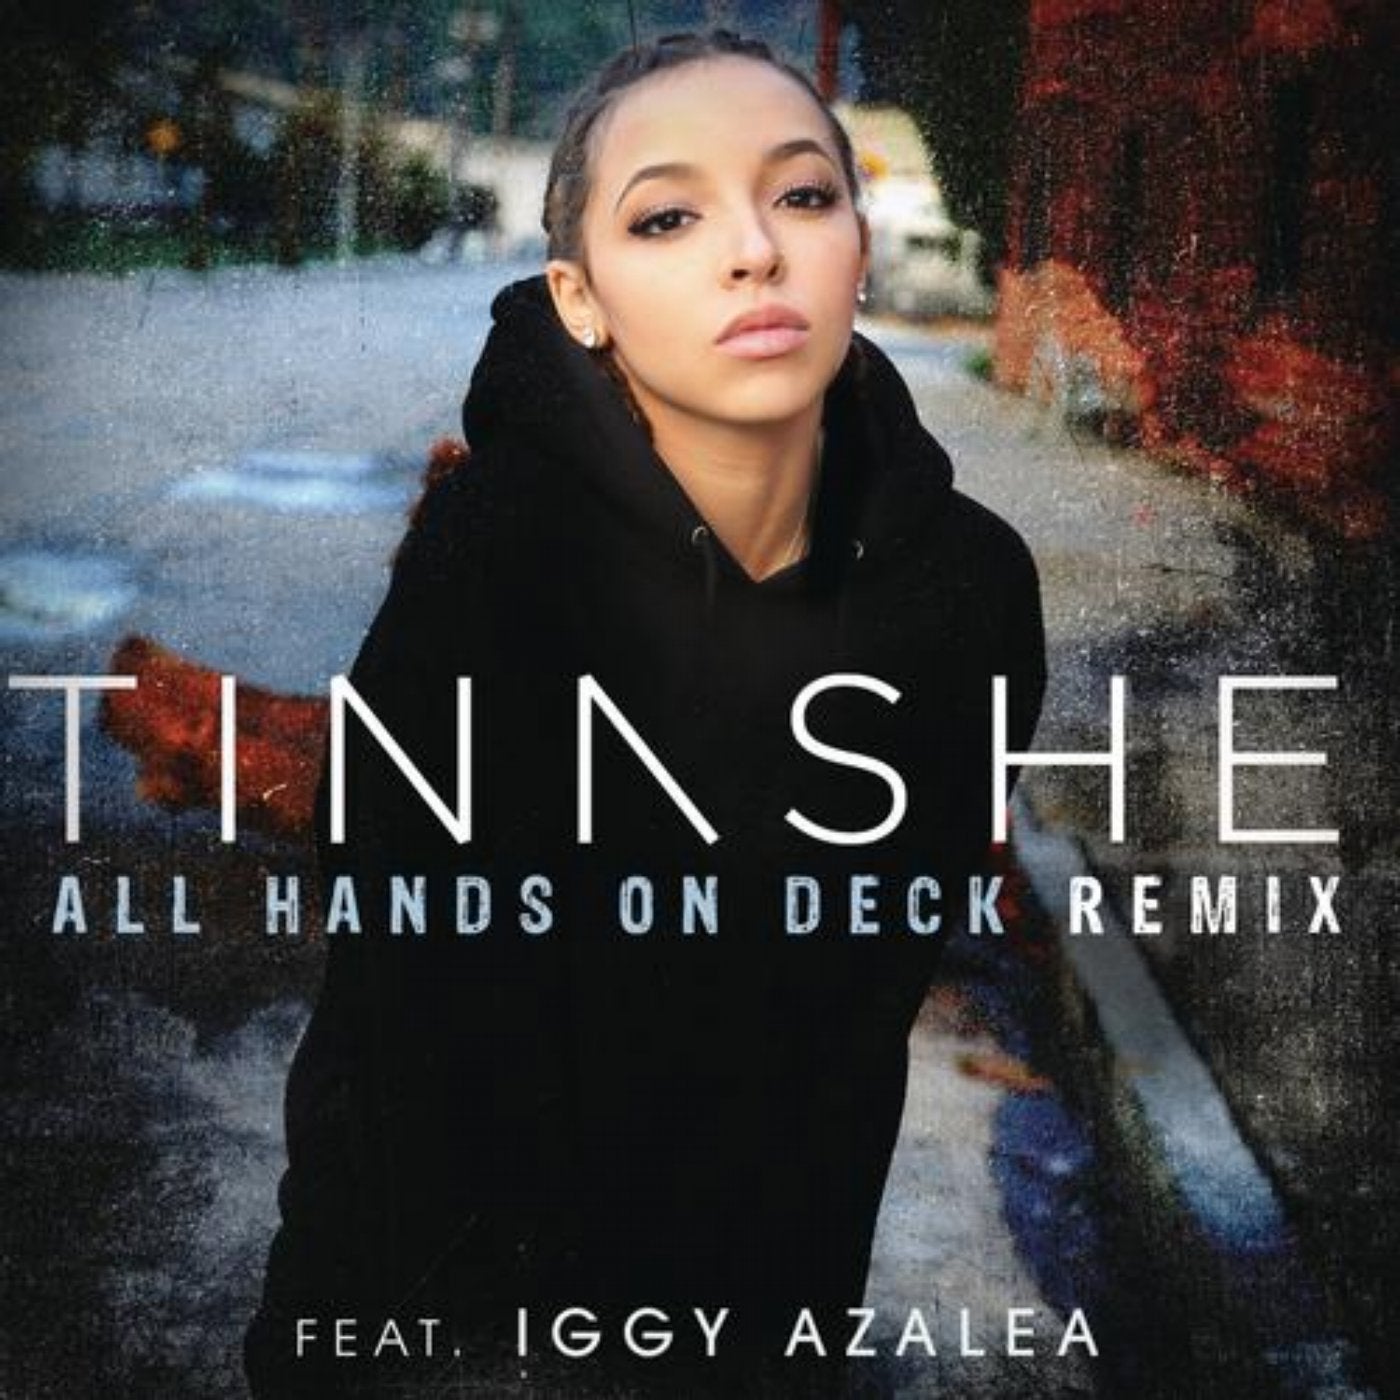 All Hands On Deck Remix